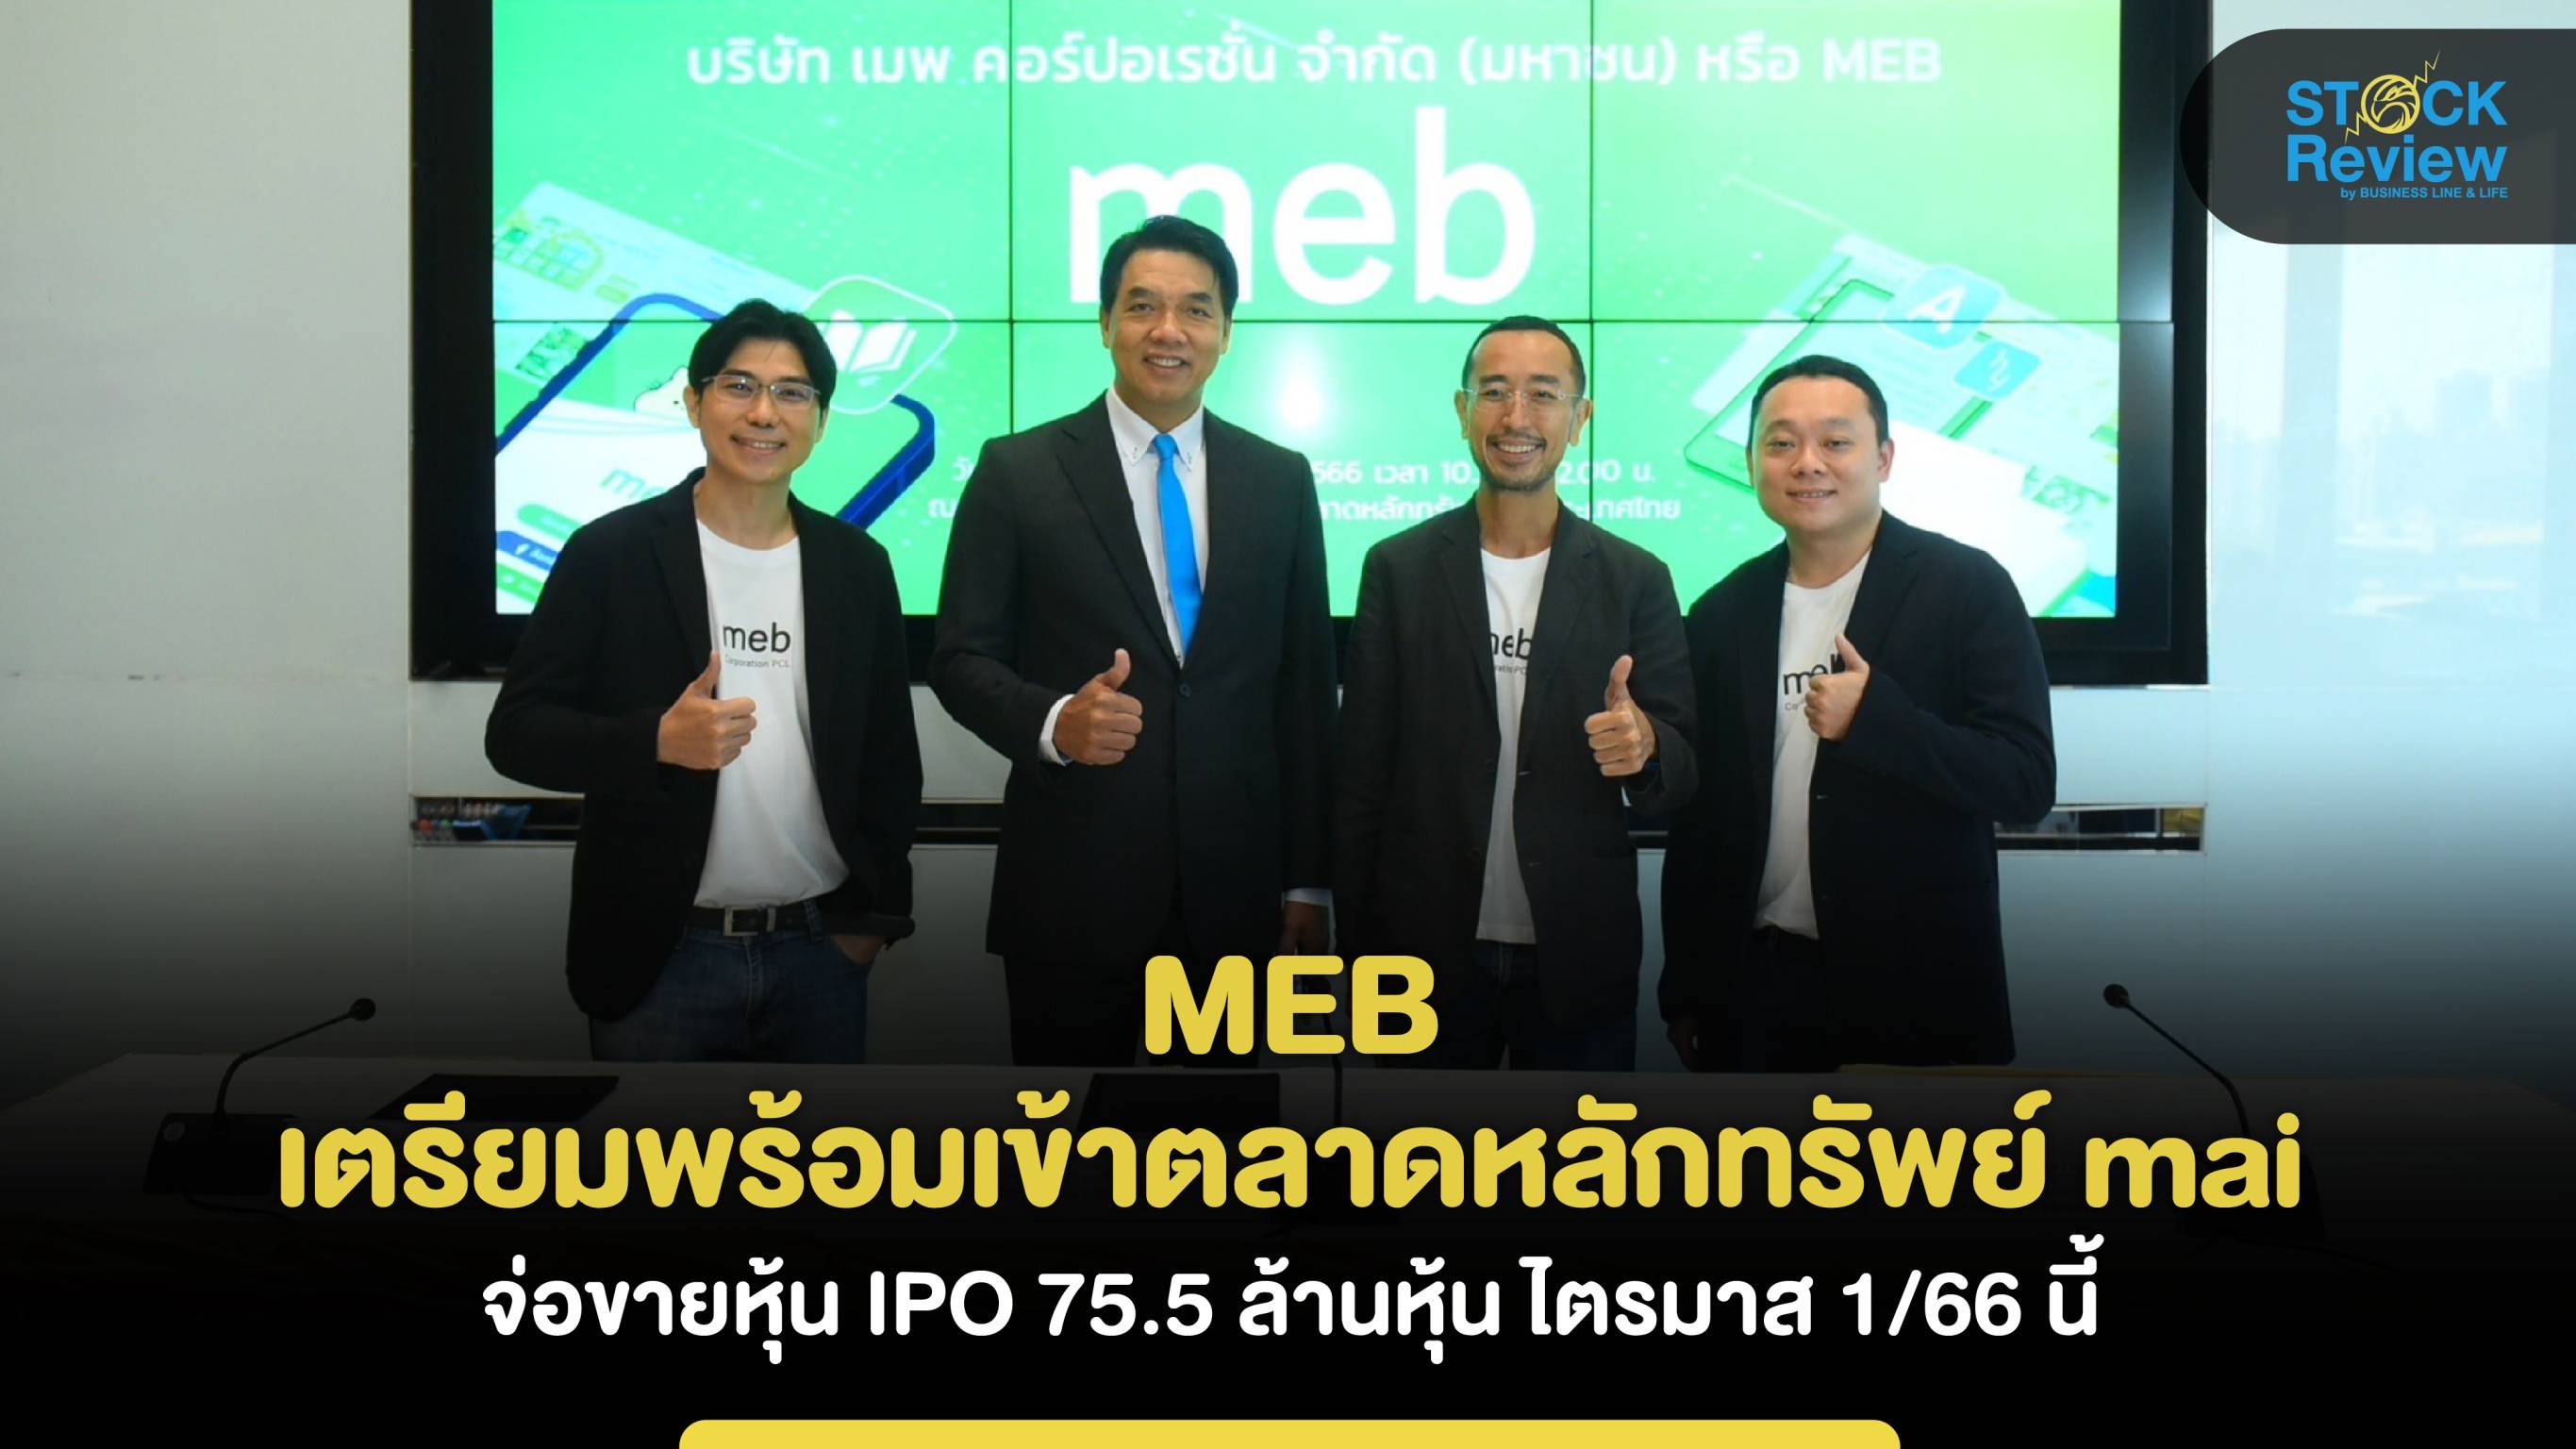 MEB เตรียมพร้อมเข้าตลาดหลักทรัพย์ mai จ่อขายหุ้น IPO 75.5 ล้านหุ้น ไตรมาส 1/66 นี้